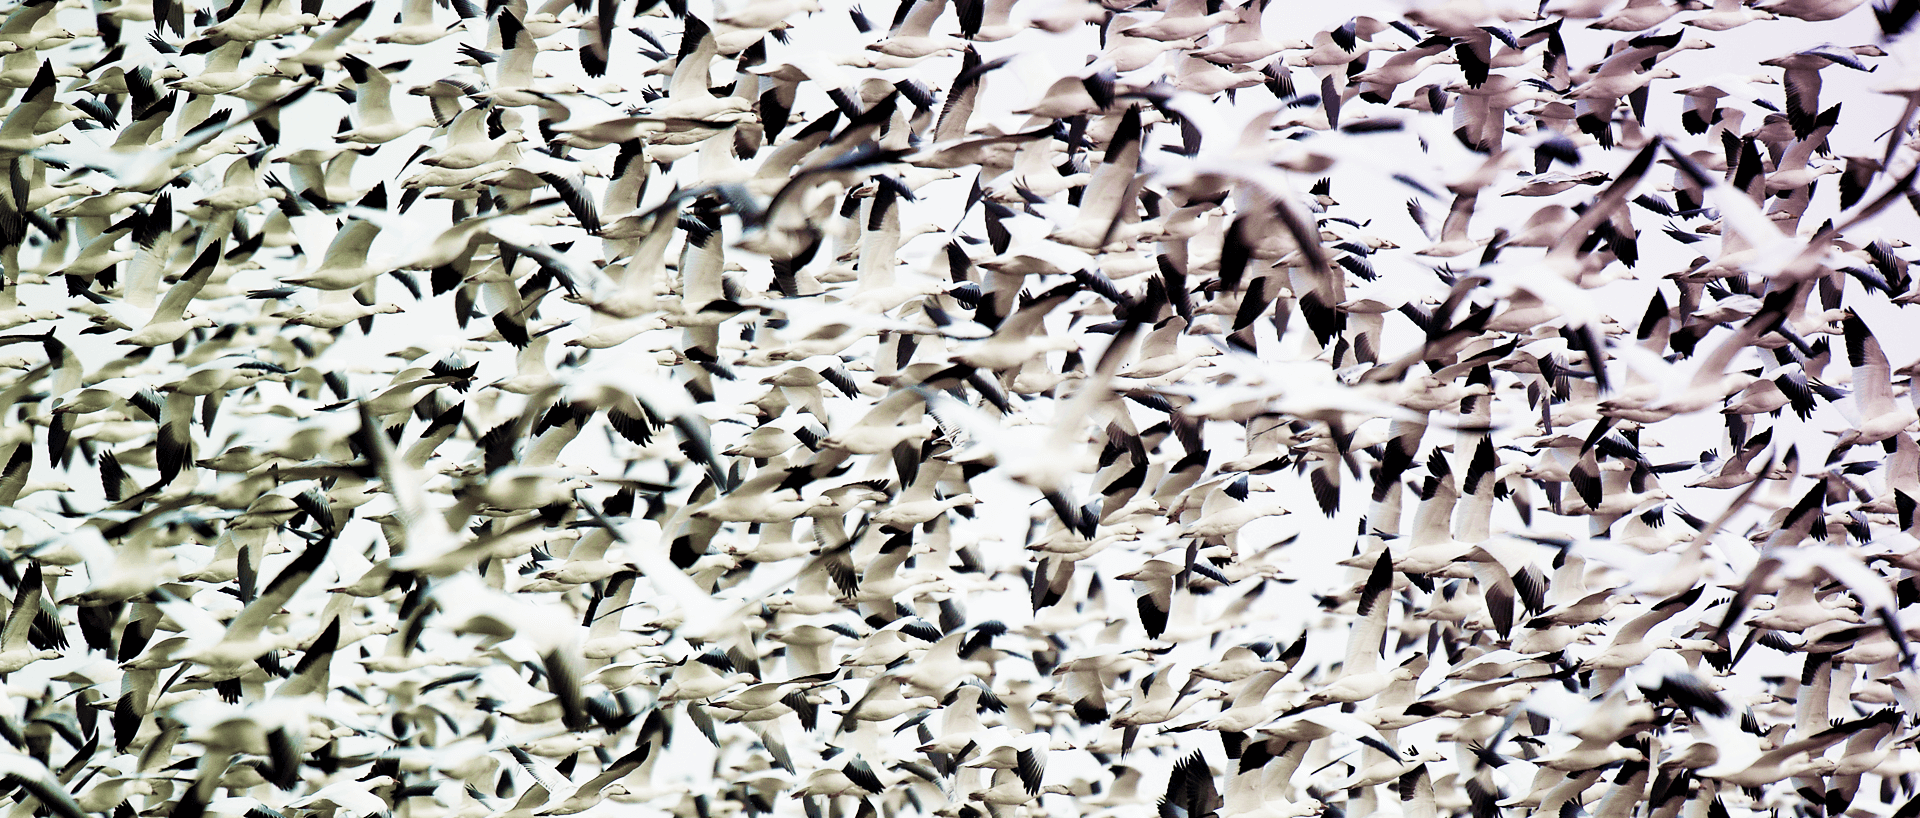 Flock of Gulls